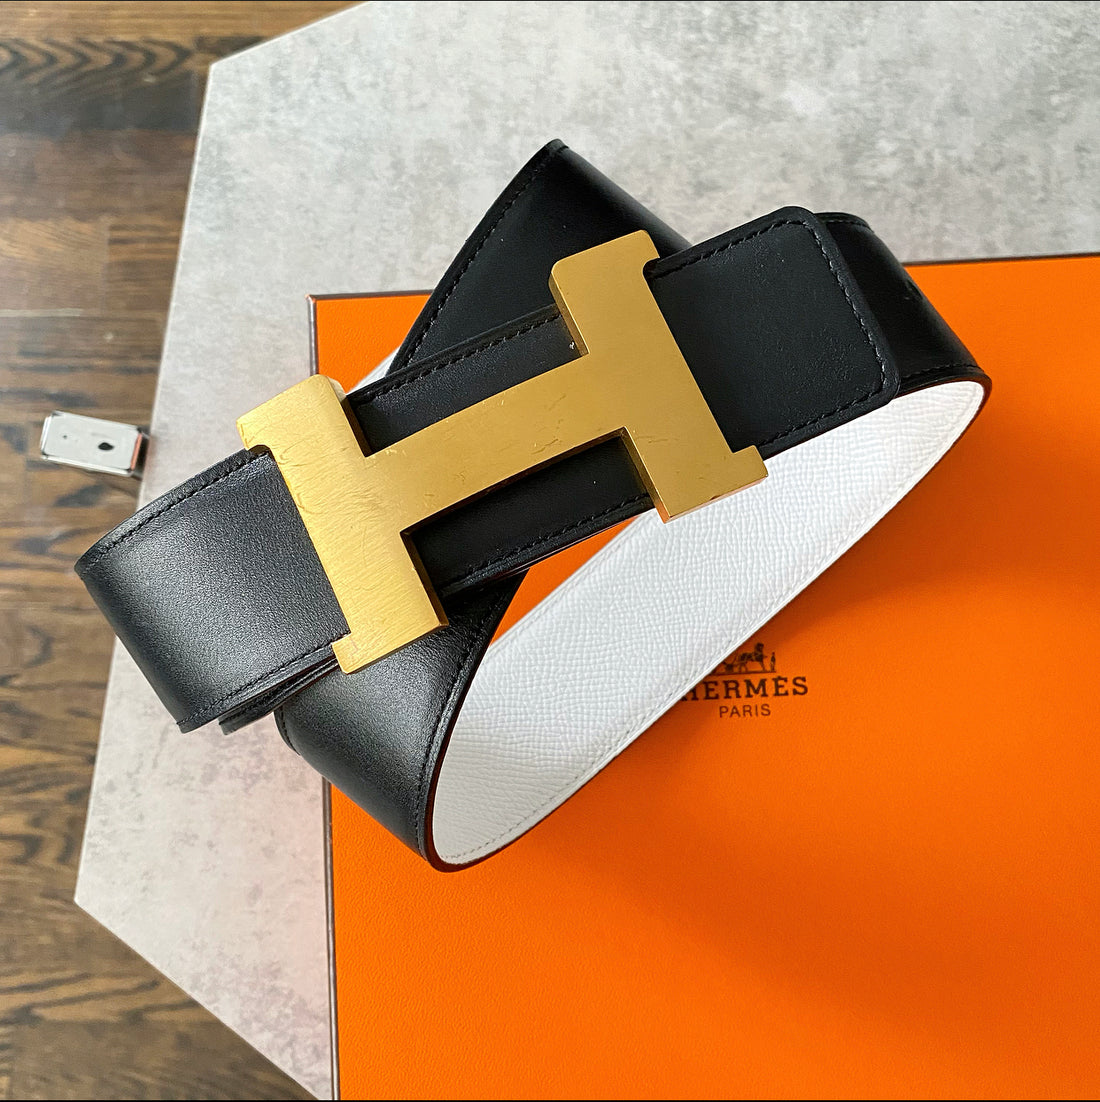 Hermès Reversible H Logo Belt Kit